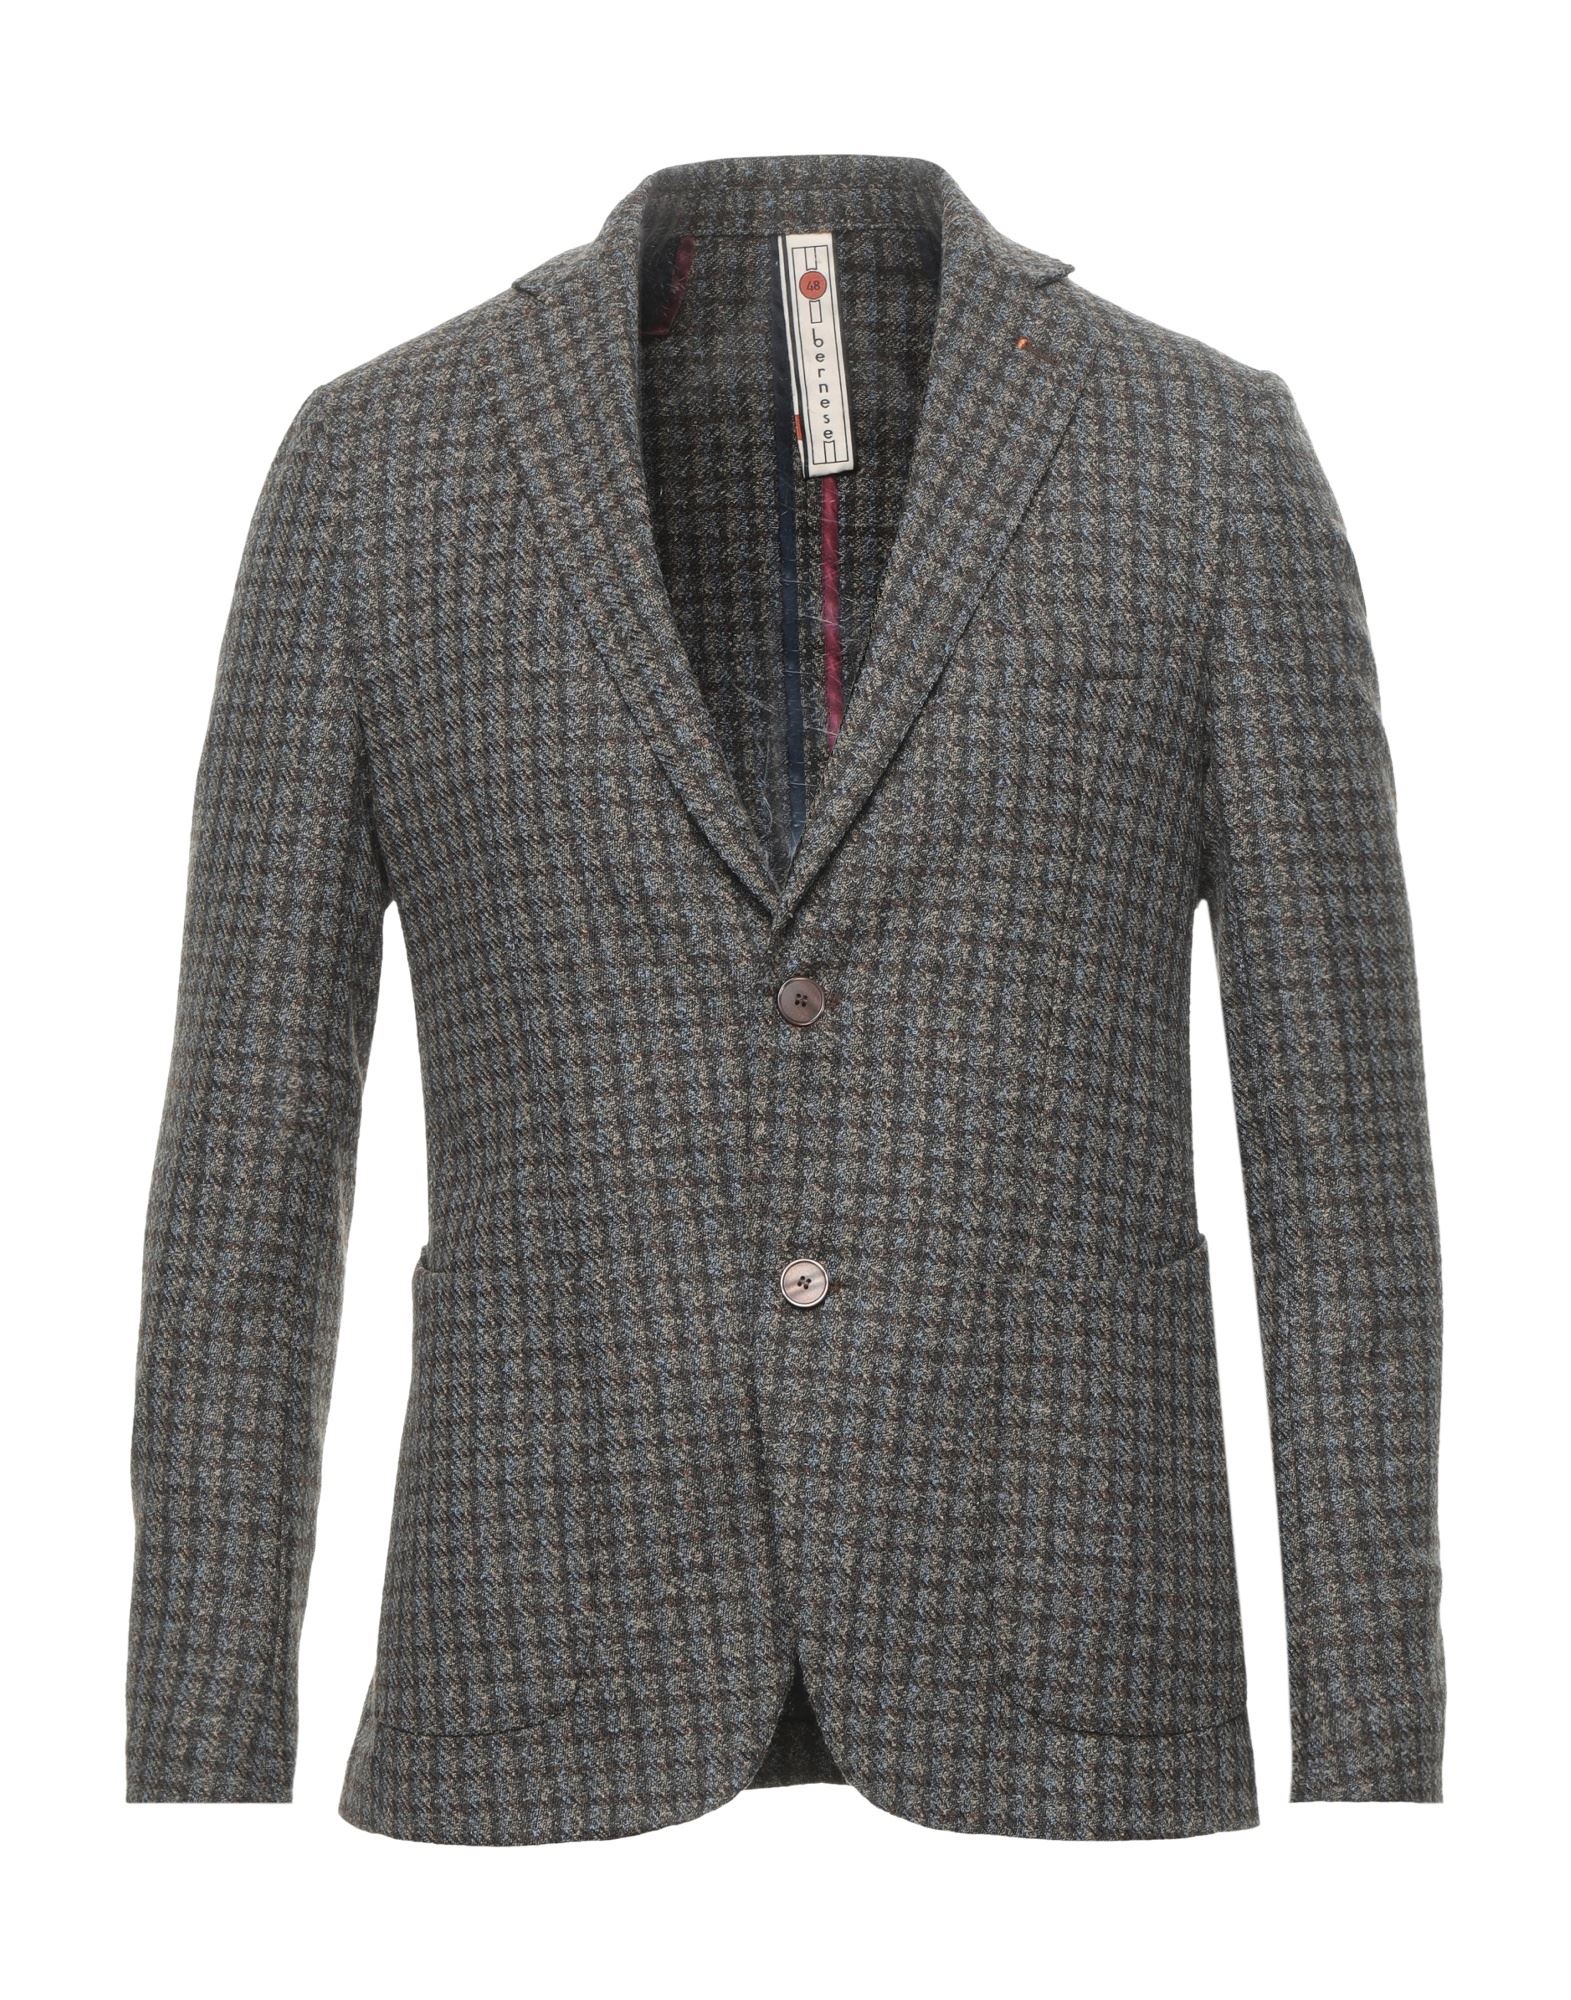 BERNESE Milano Suit jackets